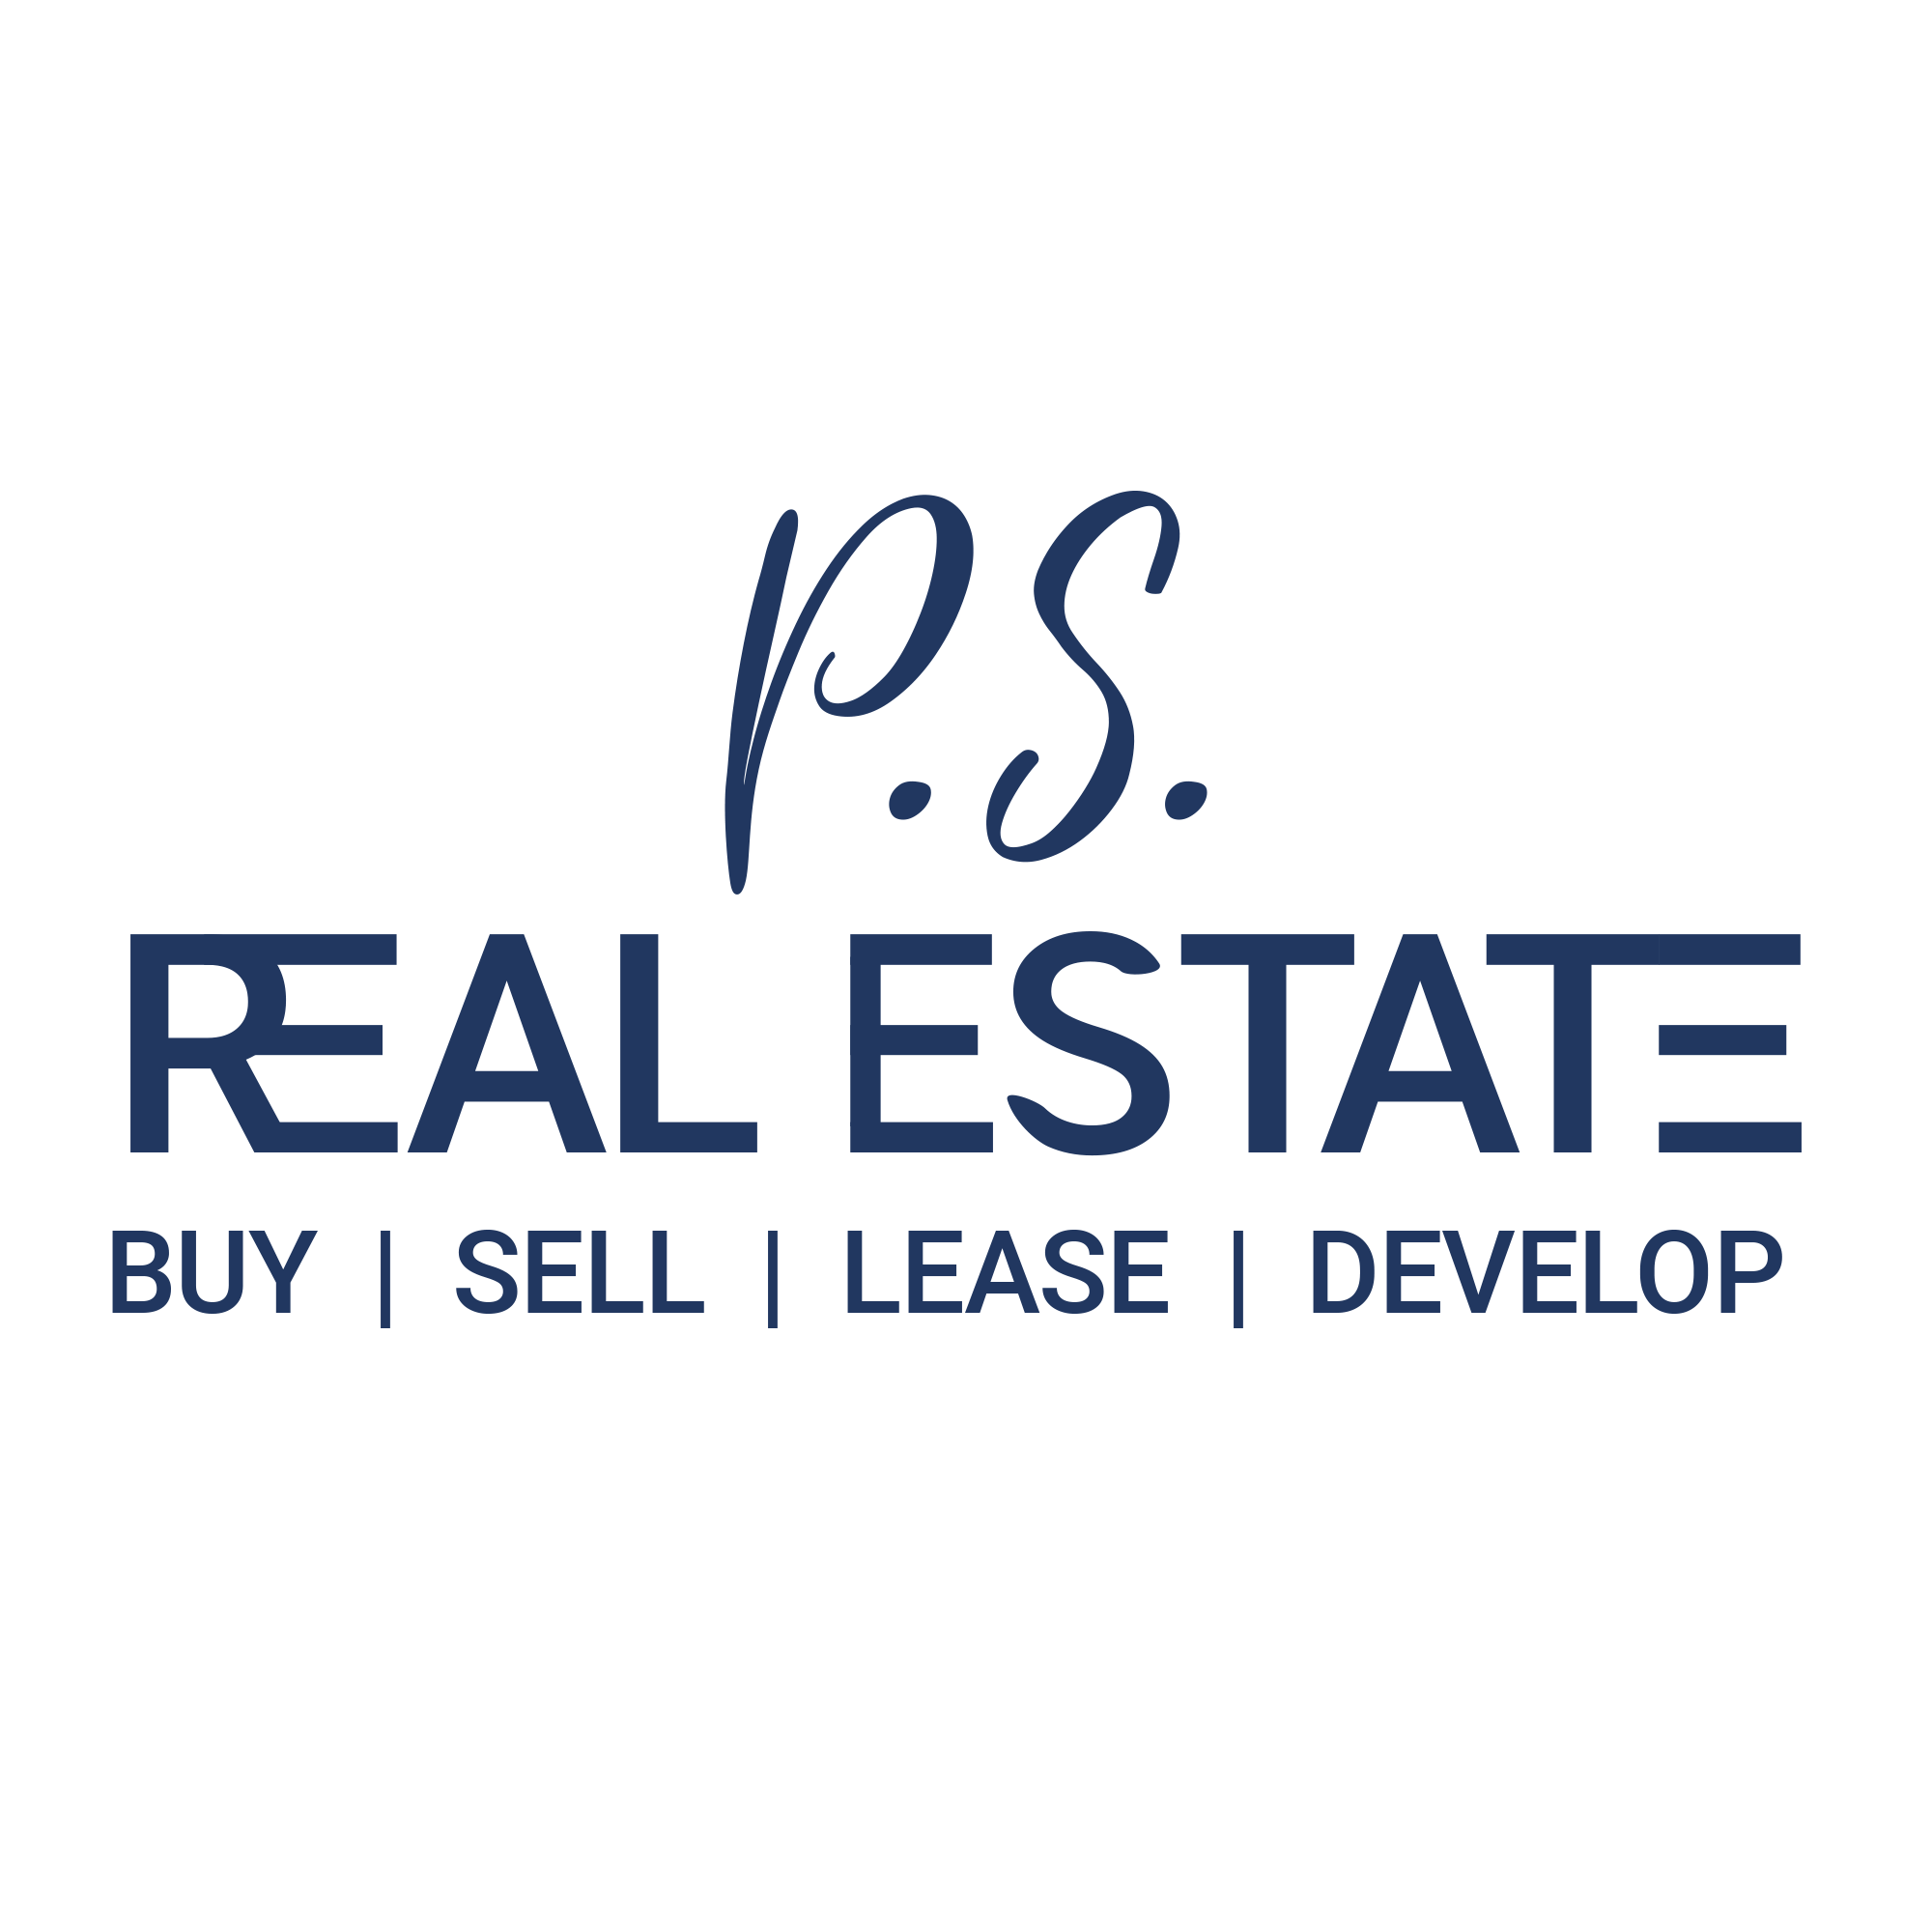 P.S. Real Estate